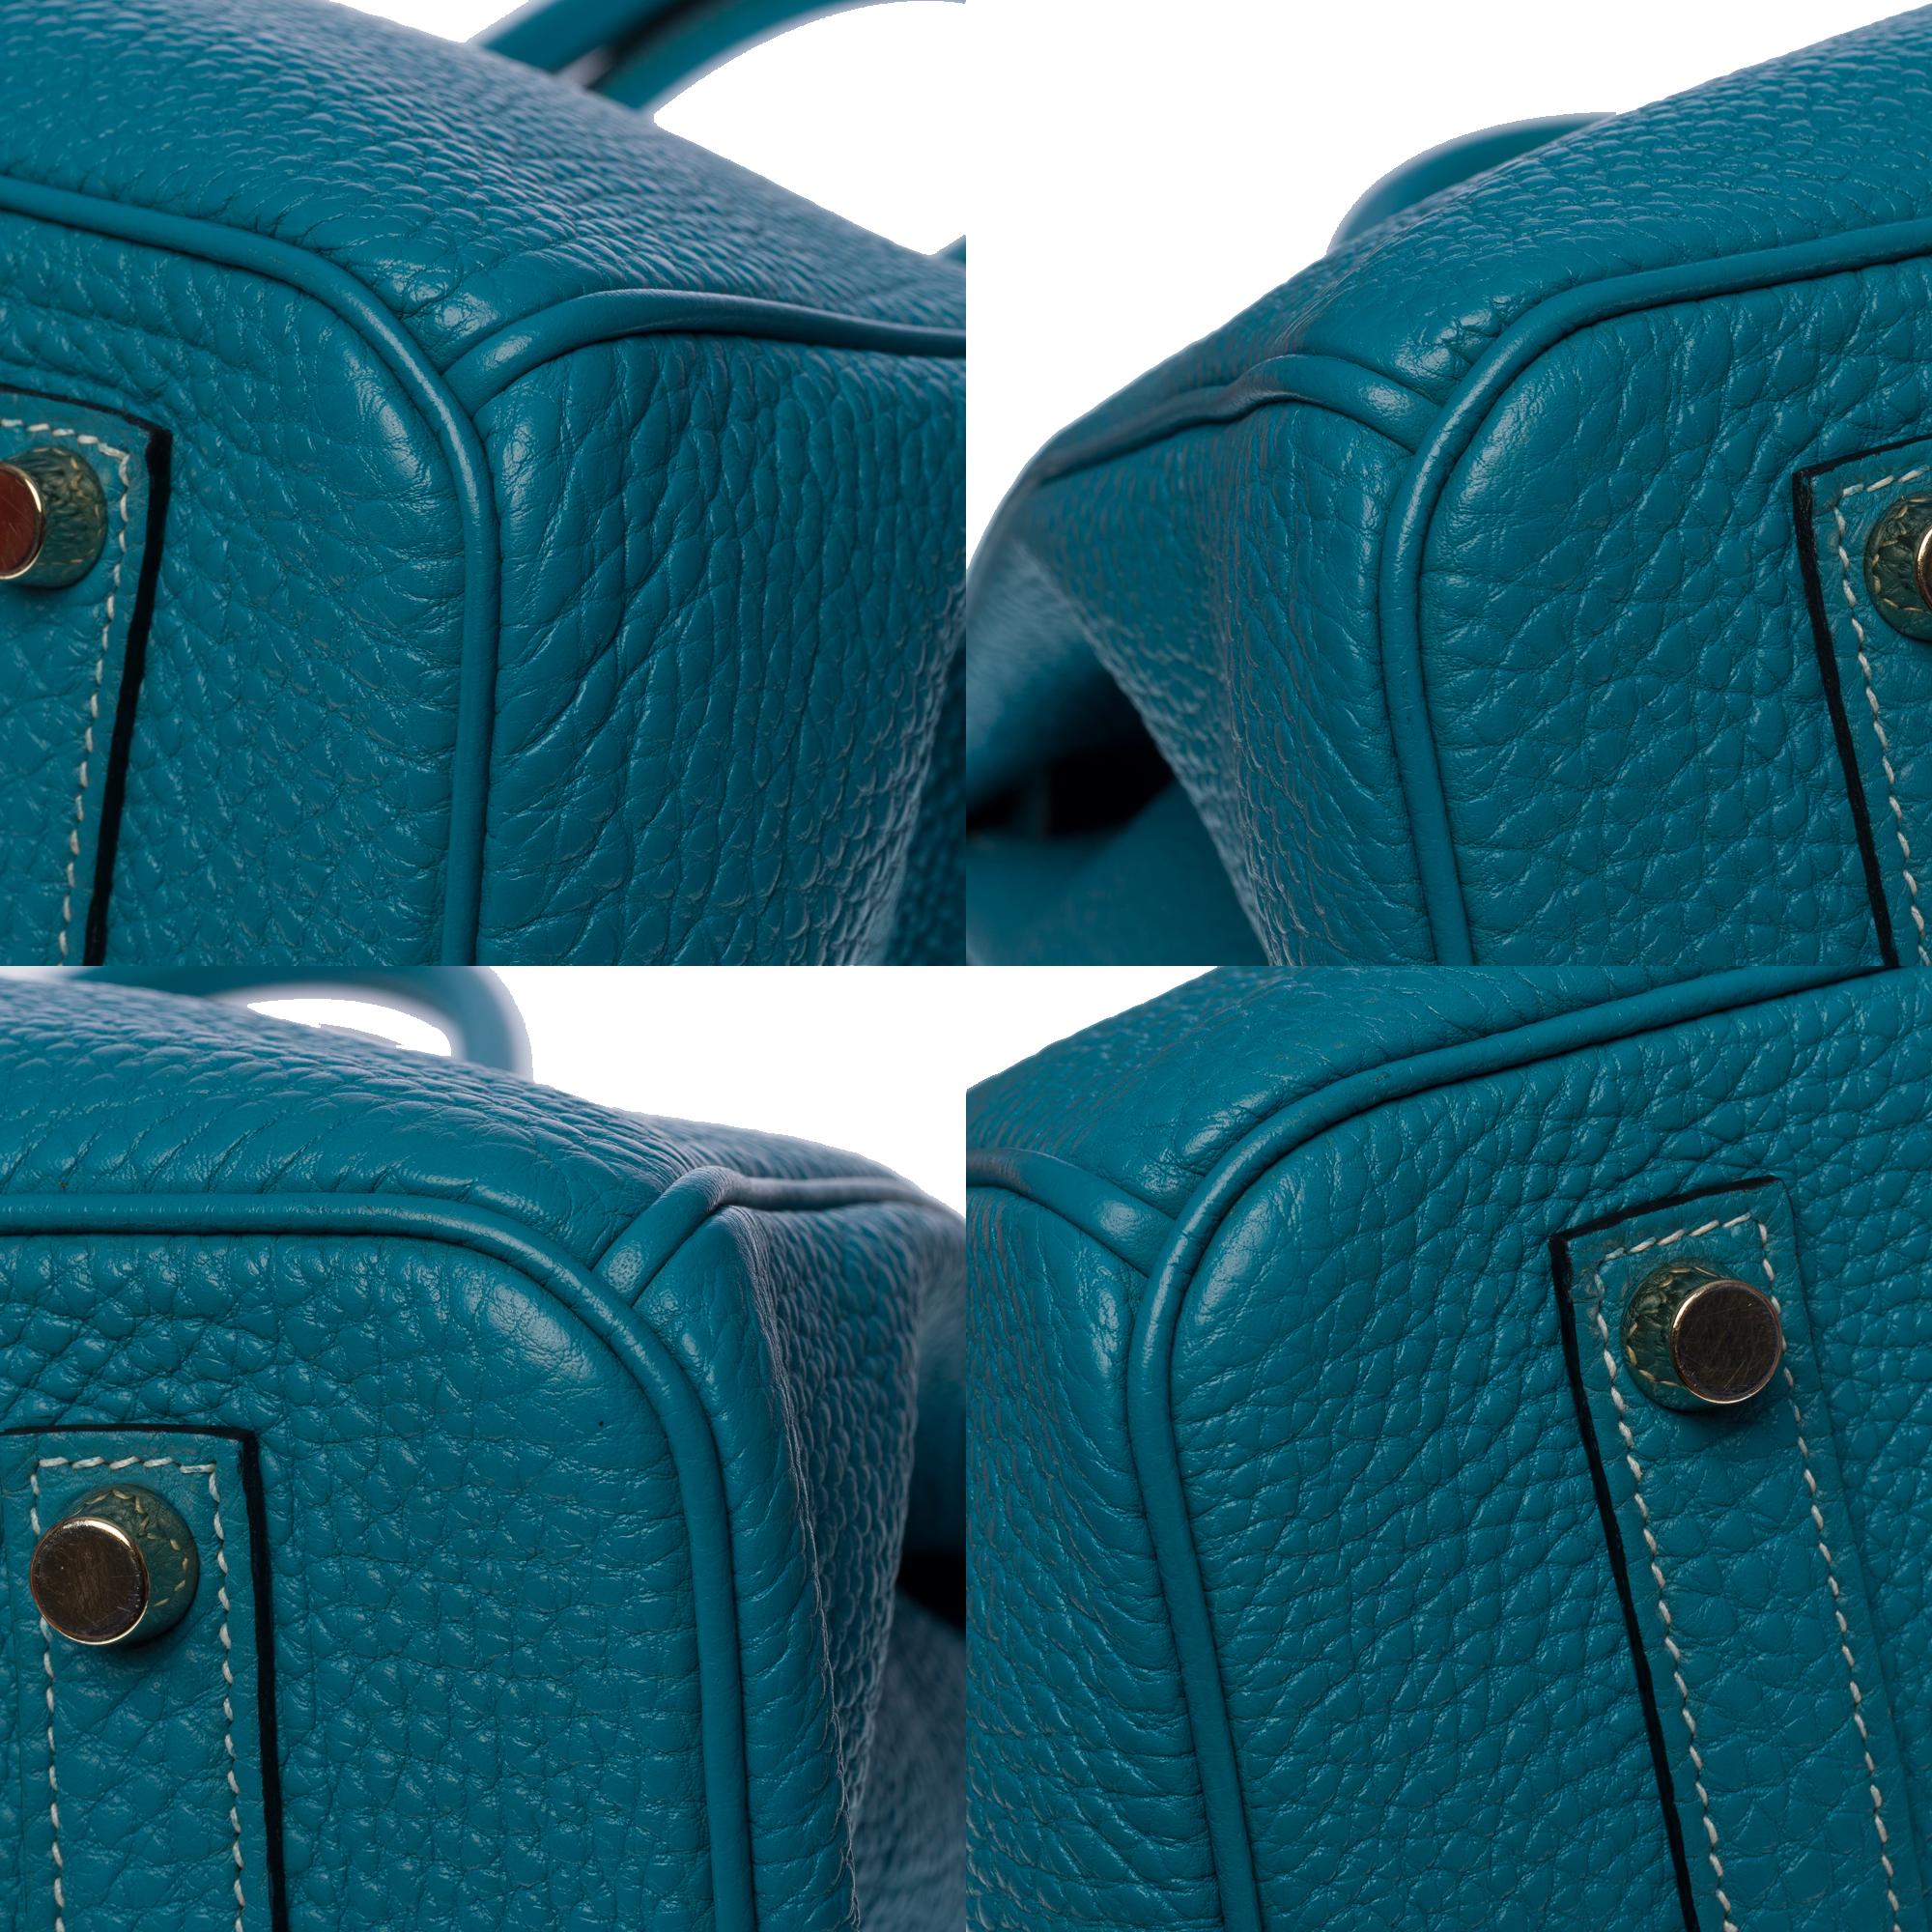 Magnificent Hermès Birkin 35 handbag in Bleu Saint-Cyr Togo leather, GHW 5